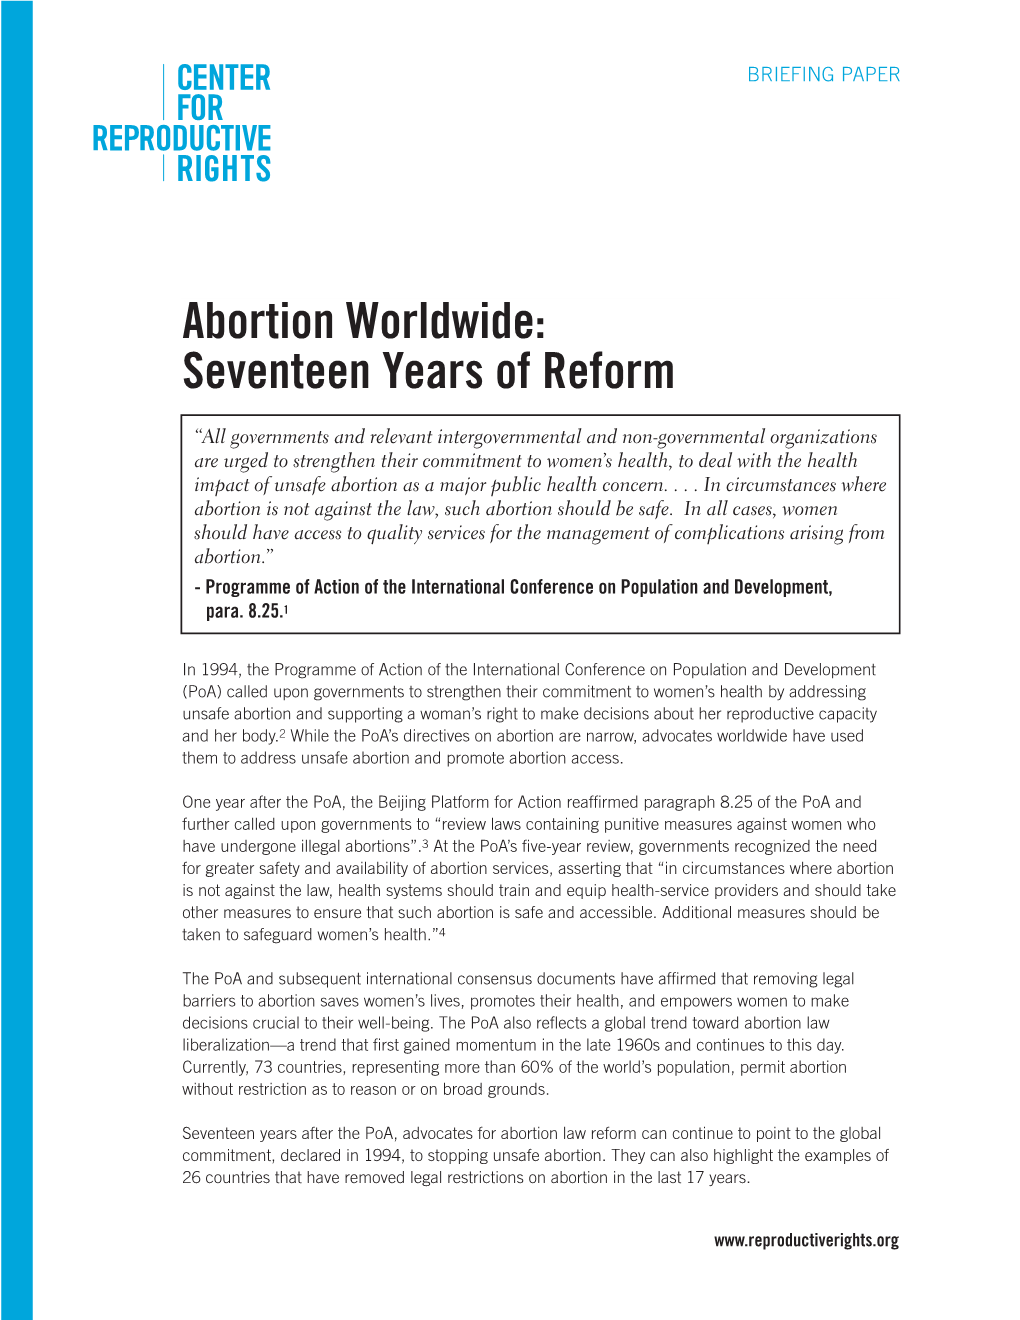 Abortion Worldwide: Seventeen Years of Reform